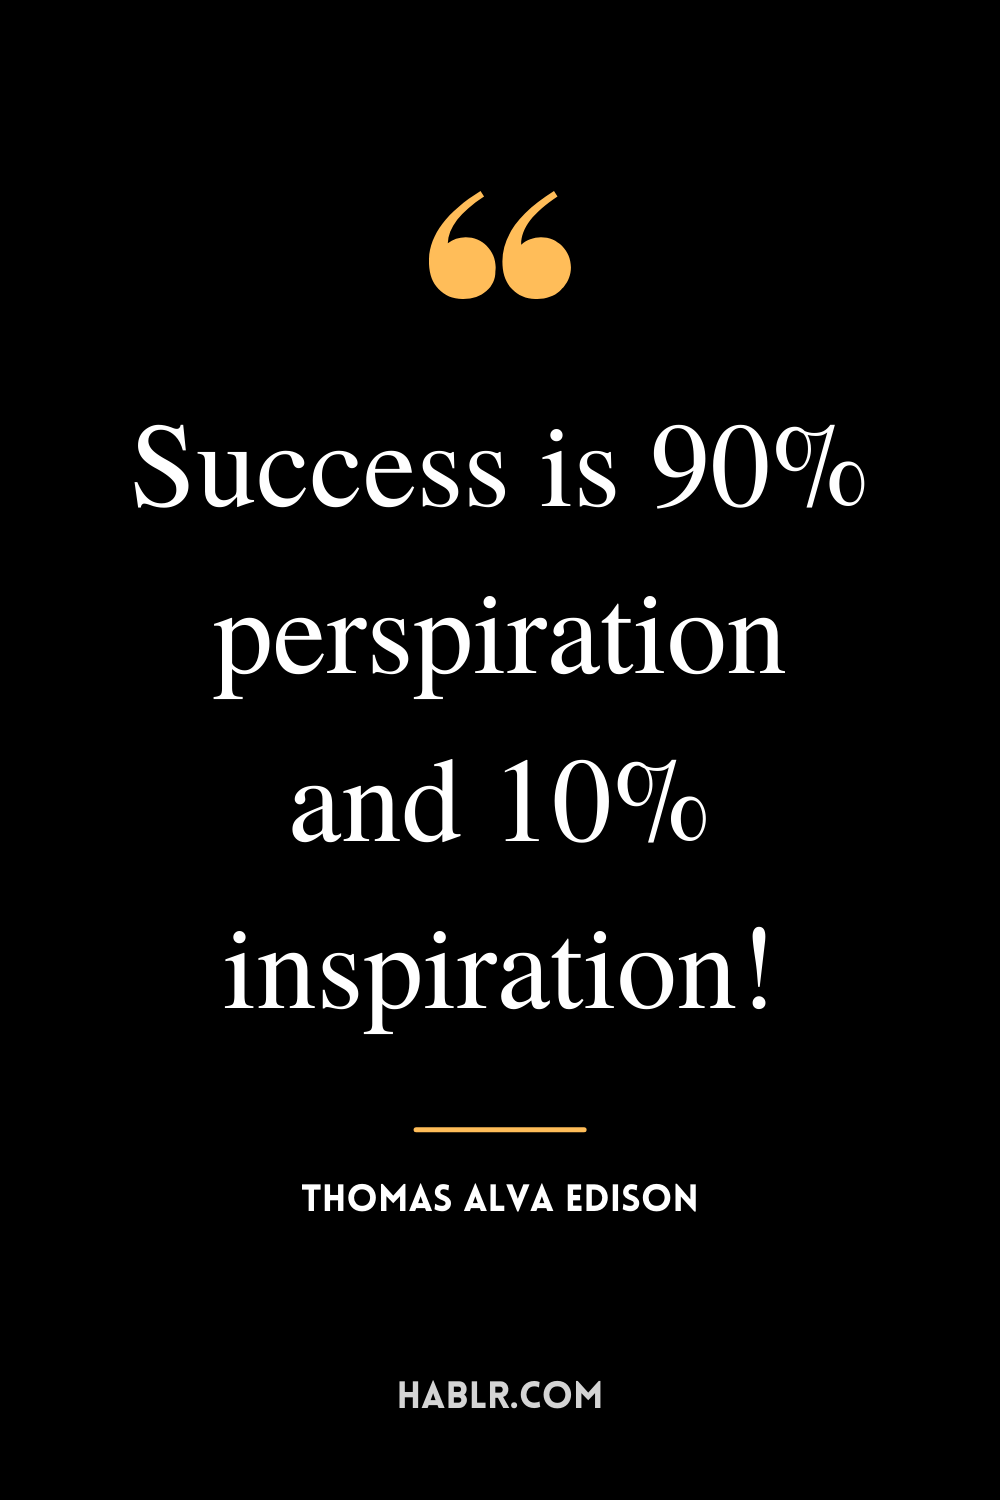 “Success is 90% perspiration and 10% inspiration!” -Thomas Alva Edison